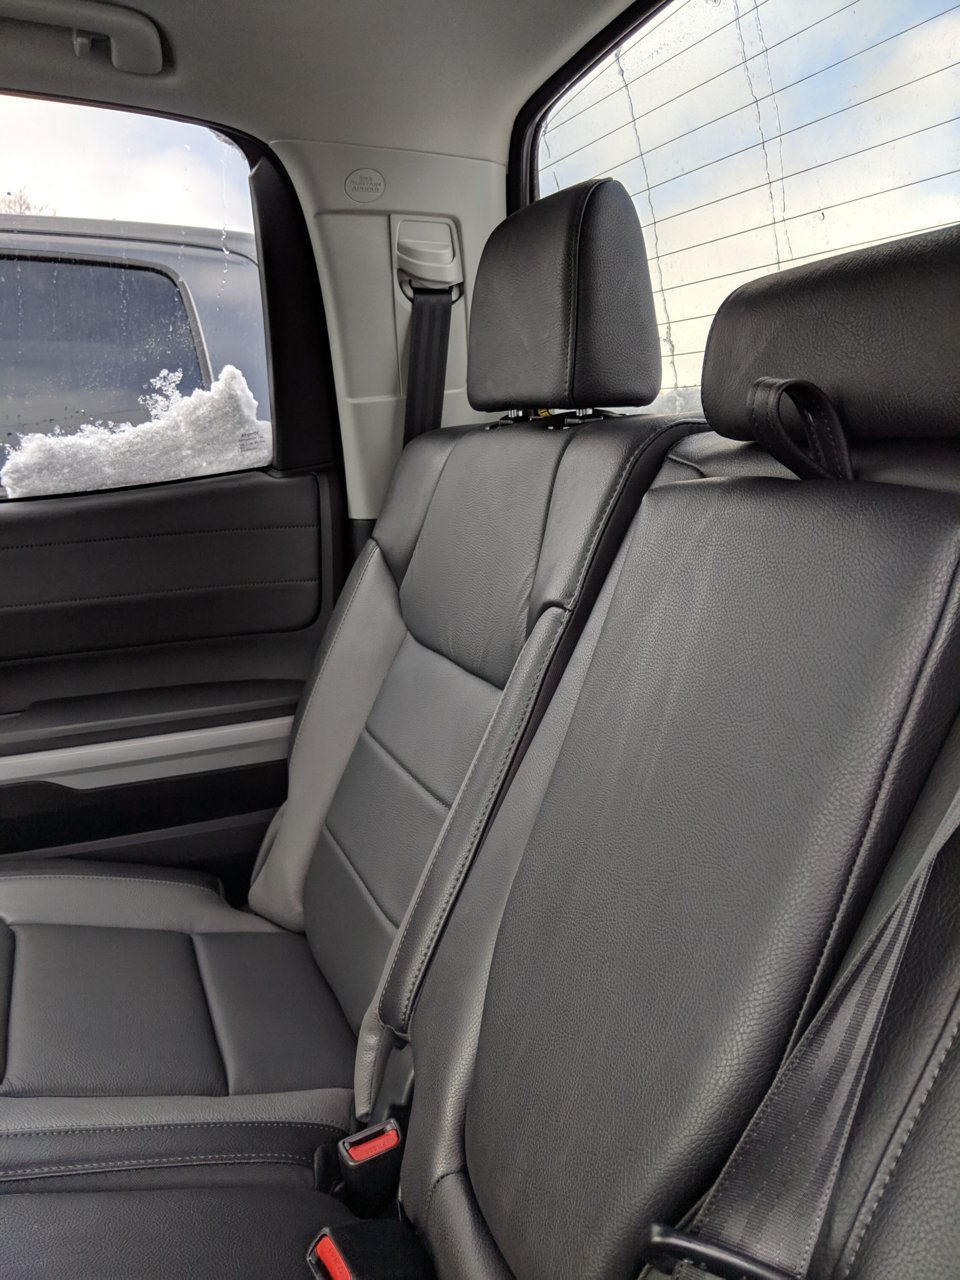 Rear seats no matching up on new Tundra | Toyota Tundra Forum